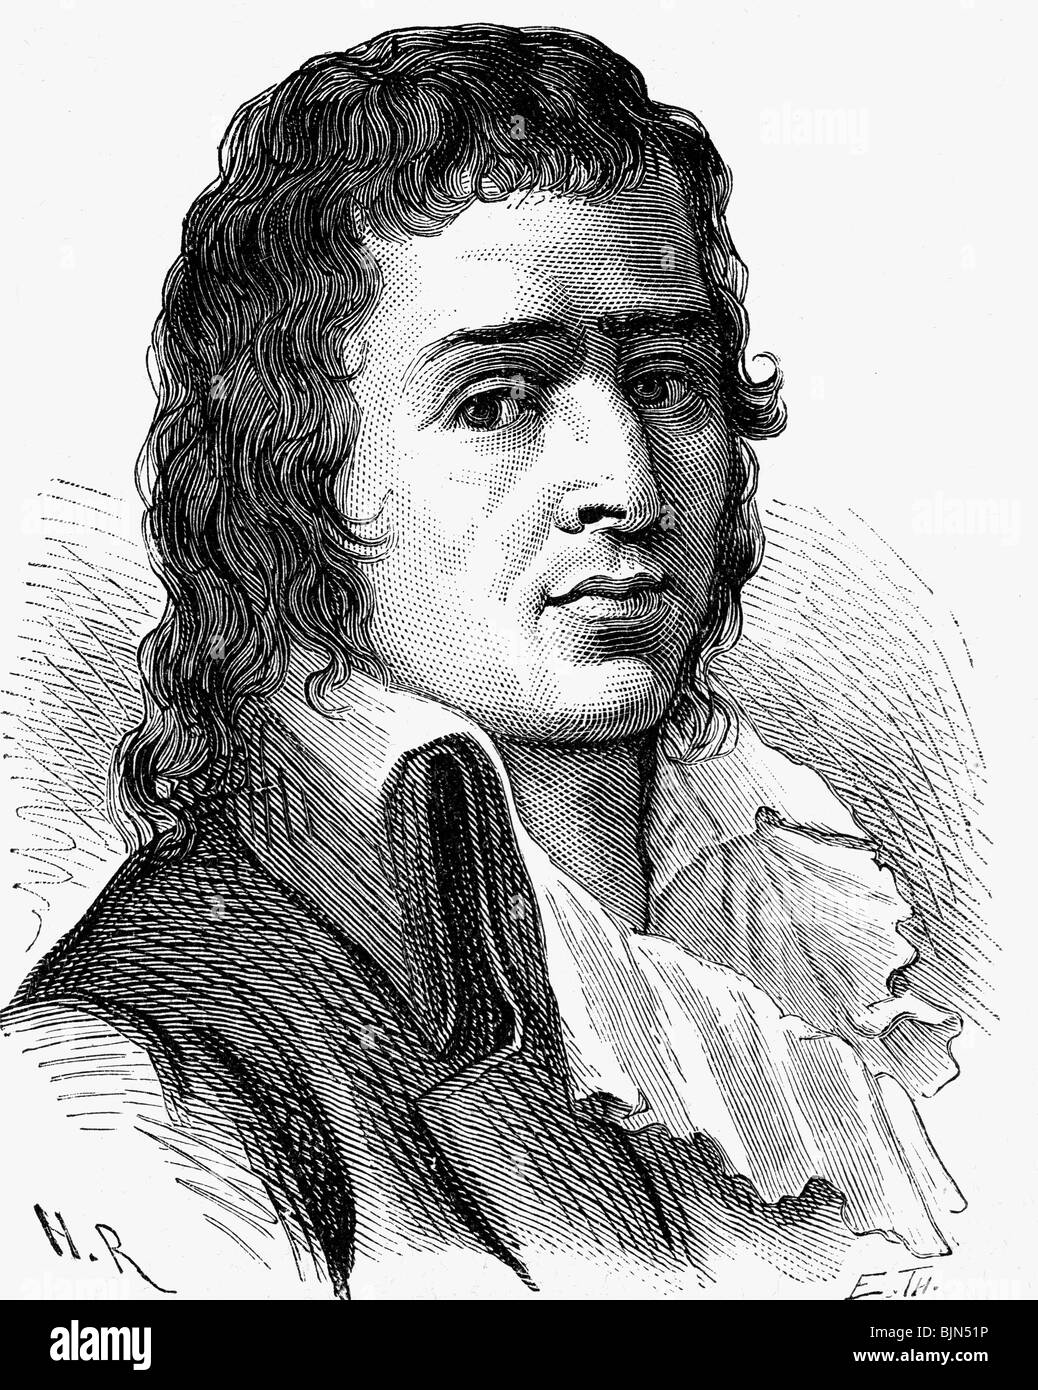 Babeuf, Francois Noel 'Gracchus', 23.11.1760 - 277.5.1797, giornalista francese, ritratto, incisione in legno, 19. Jahrhundert, , Foto Stock